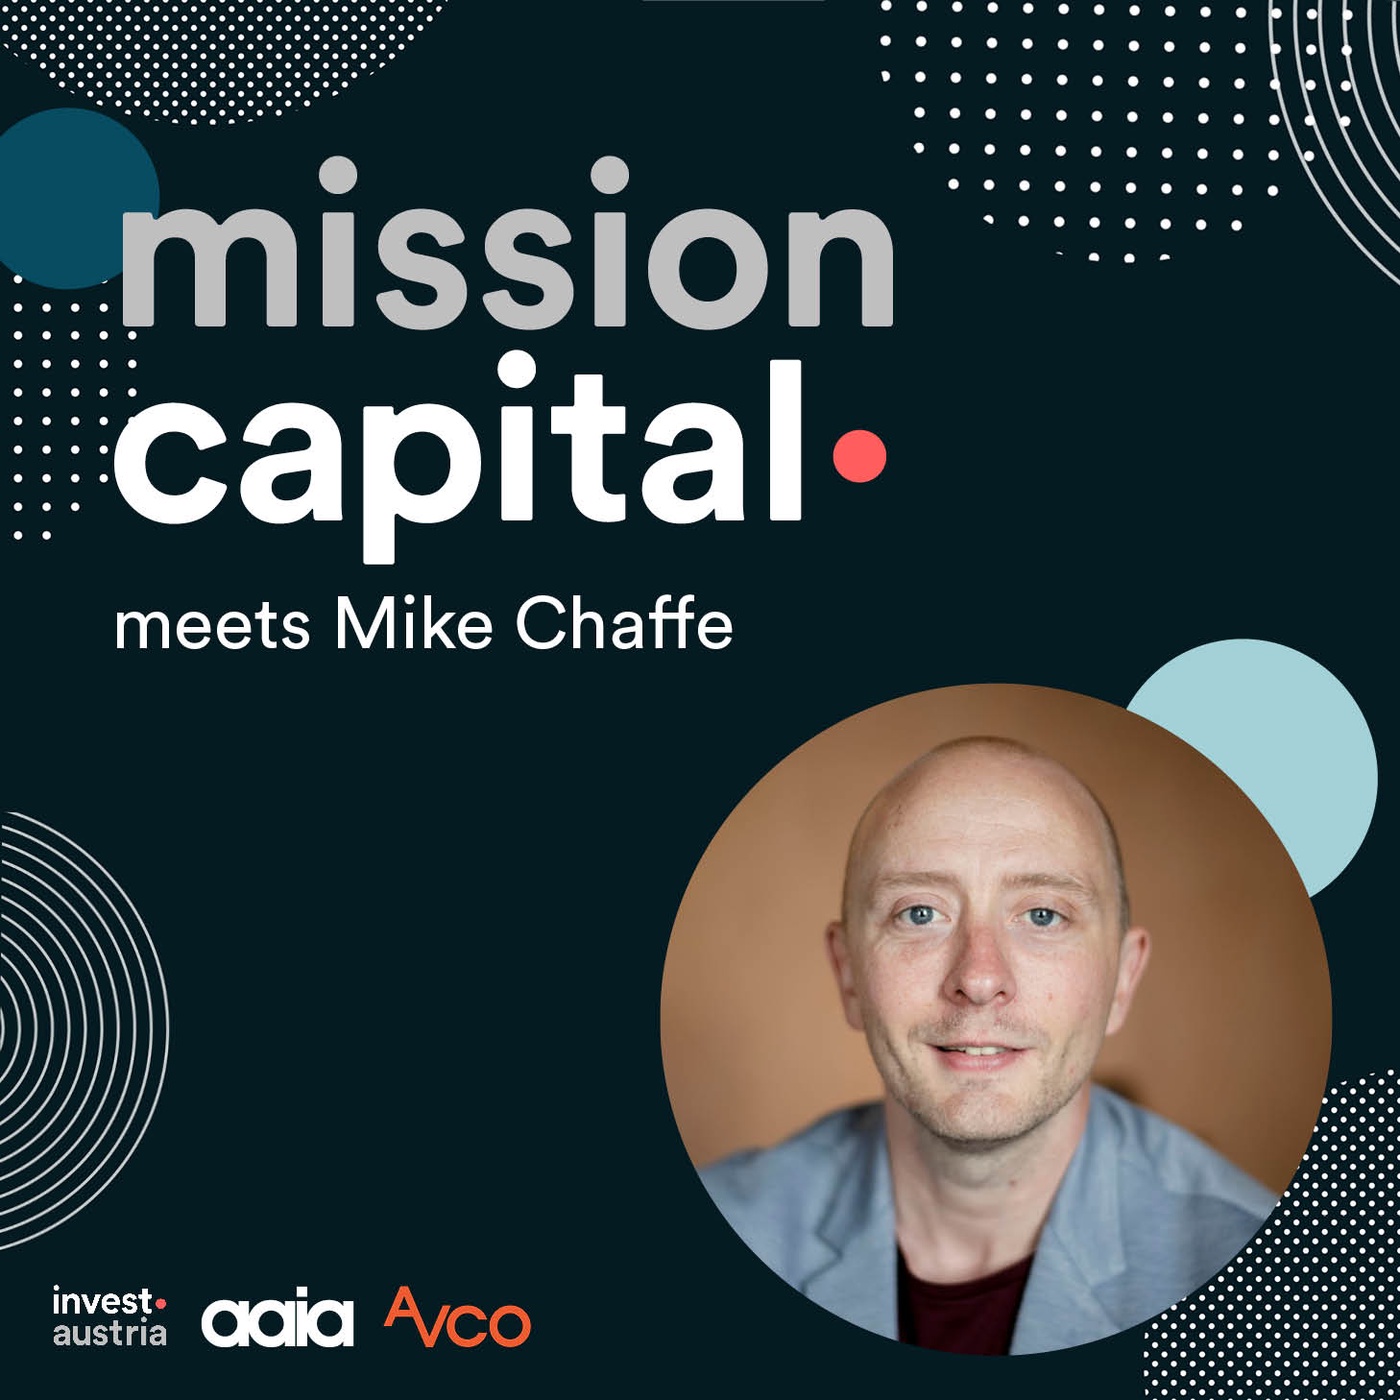 #4 mission capital meets Michael Chaffe